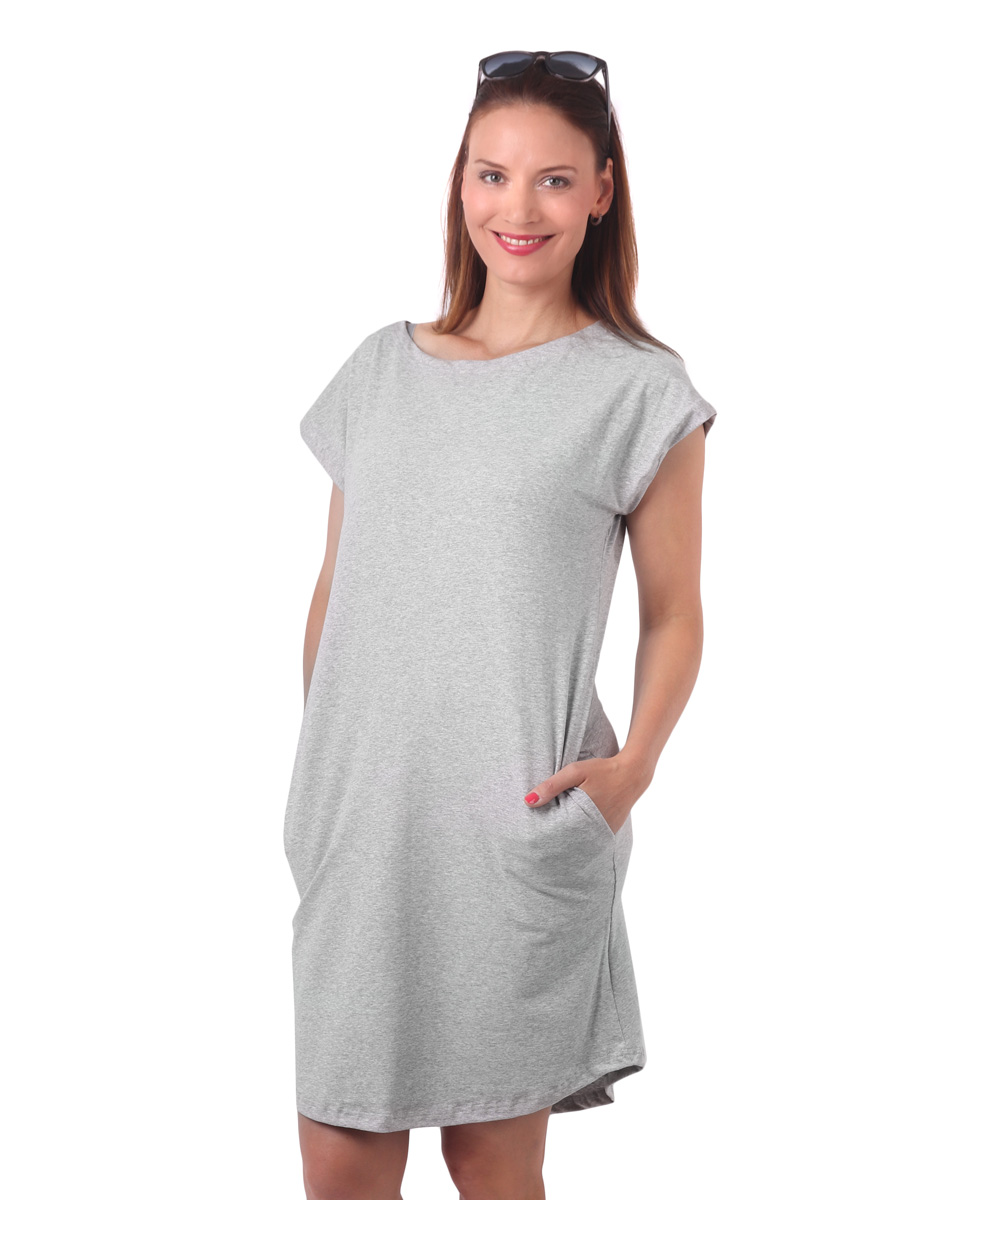 Women's dress with pockets Zoe, oversized loose fit, grey melange